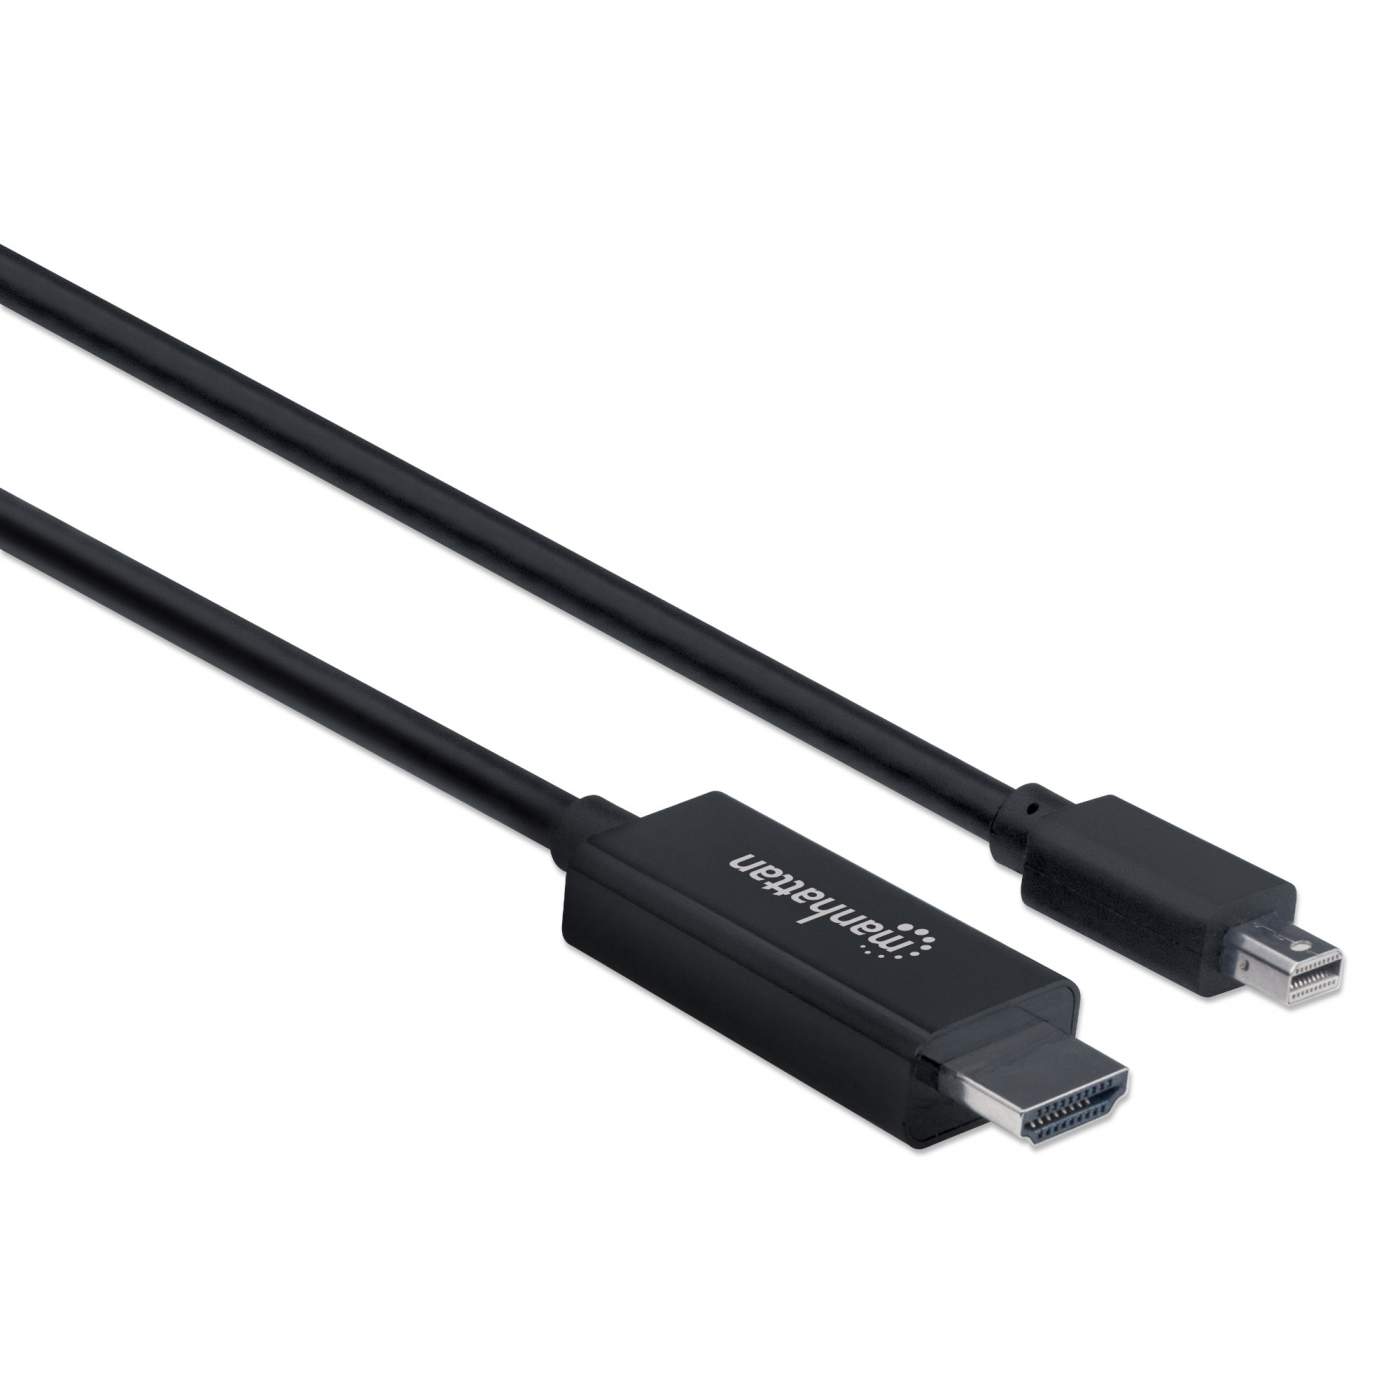 4K@60Hz Mini DisplayPort to HDMI Cable Image 2